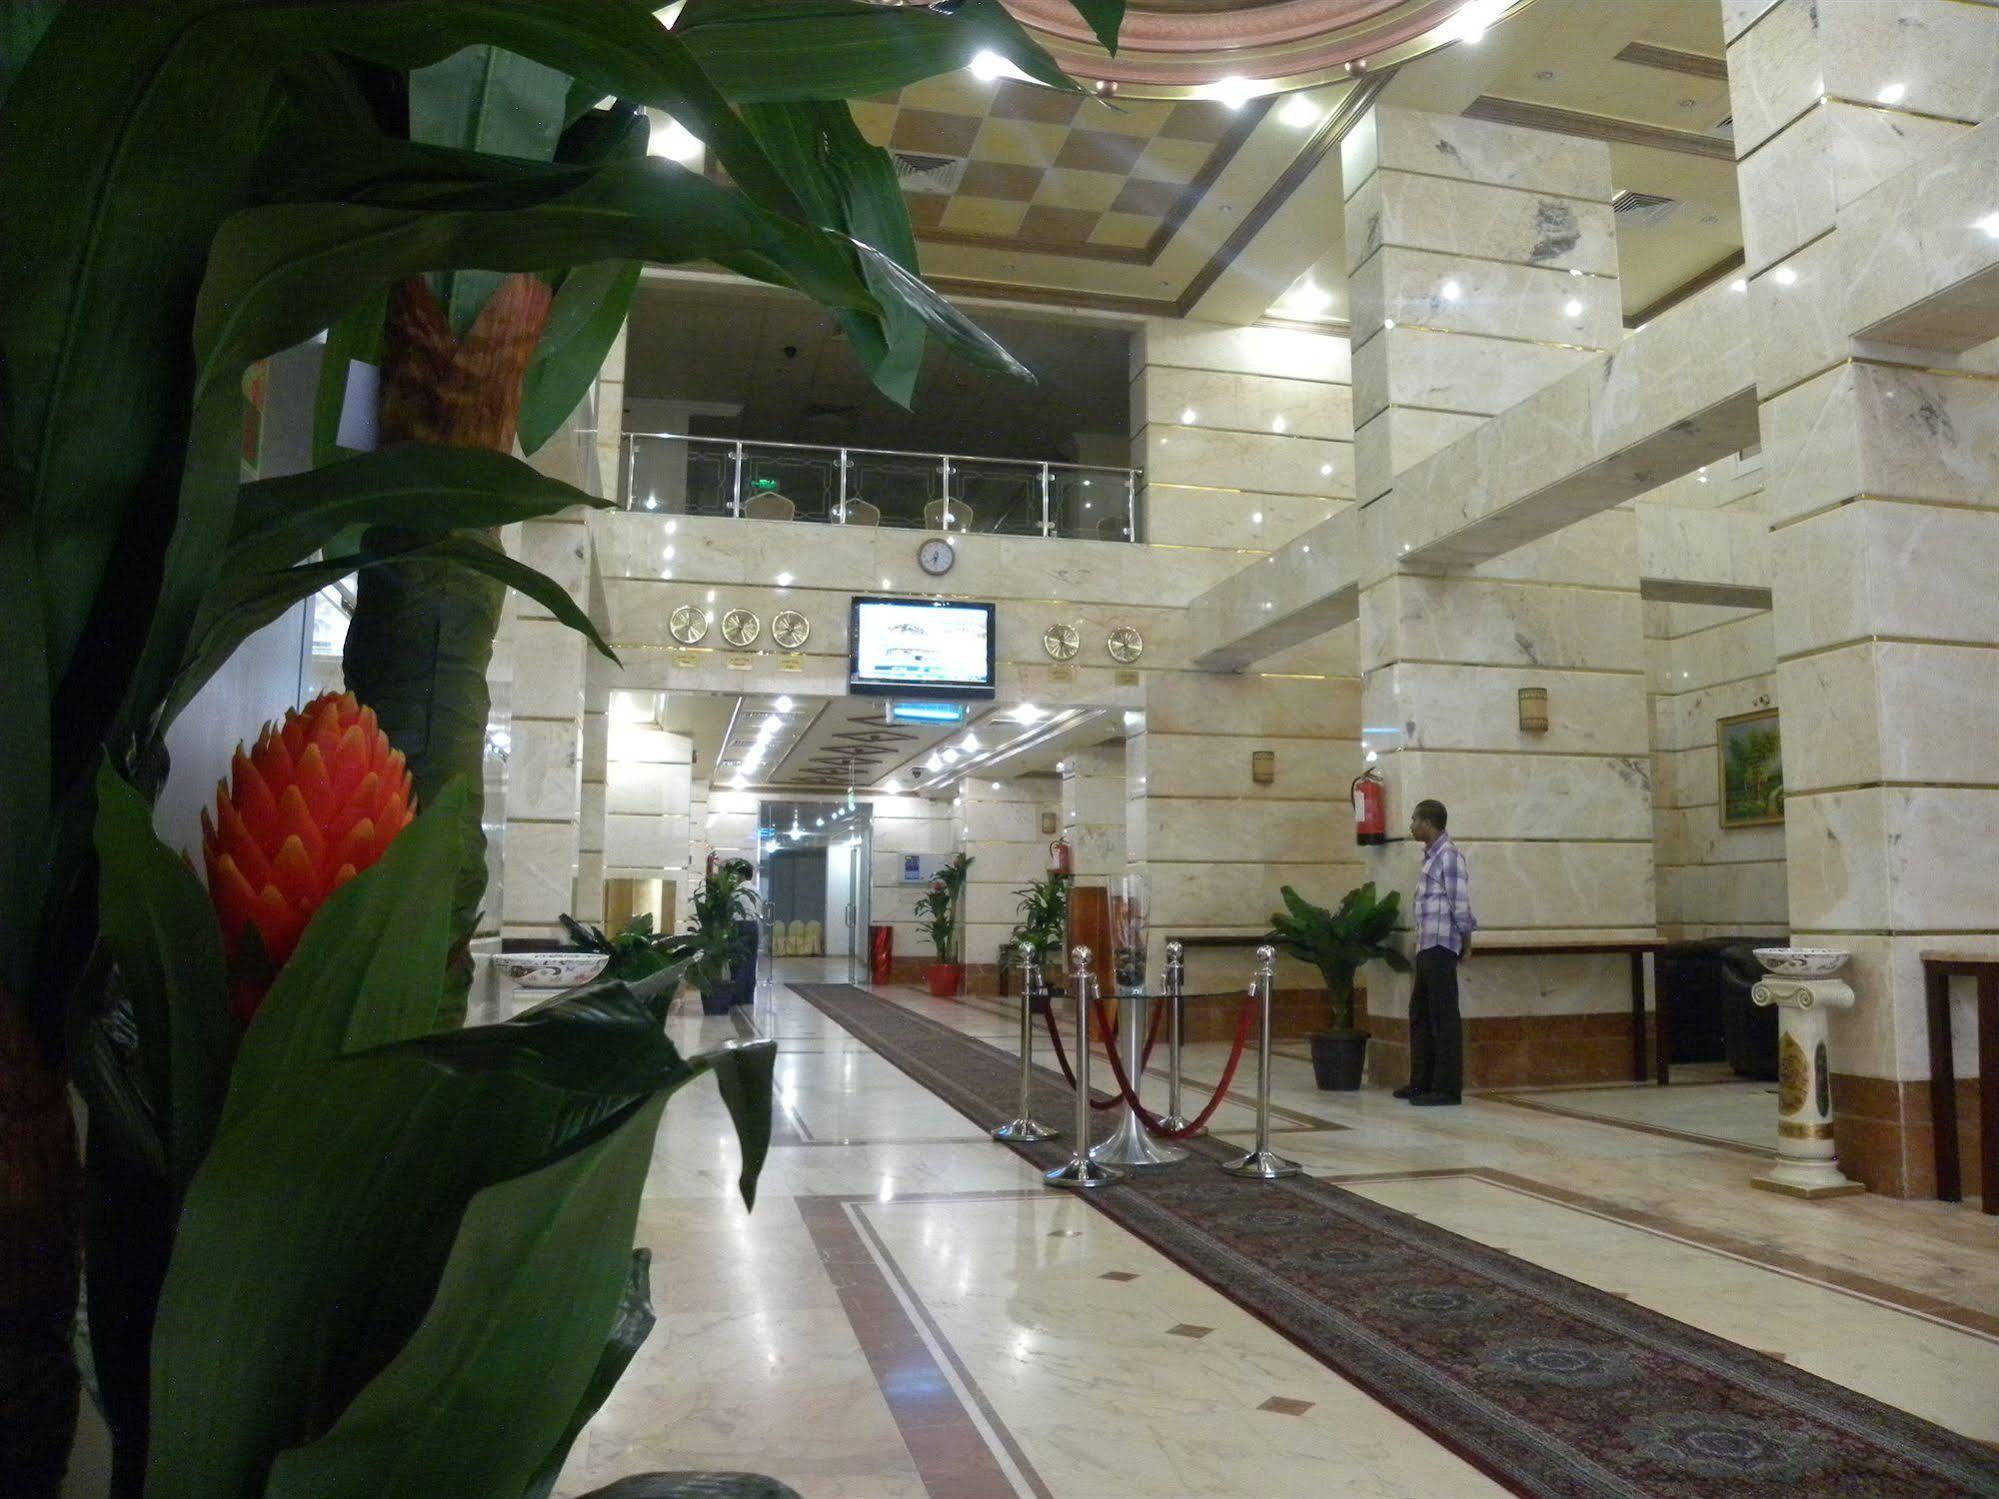 Forsan Al Aseel Hotel Mecca Exterior photo